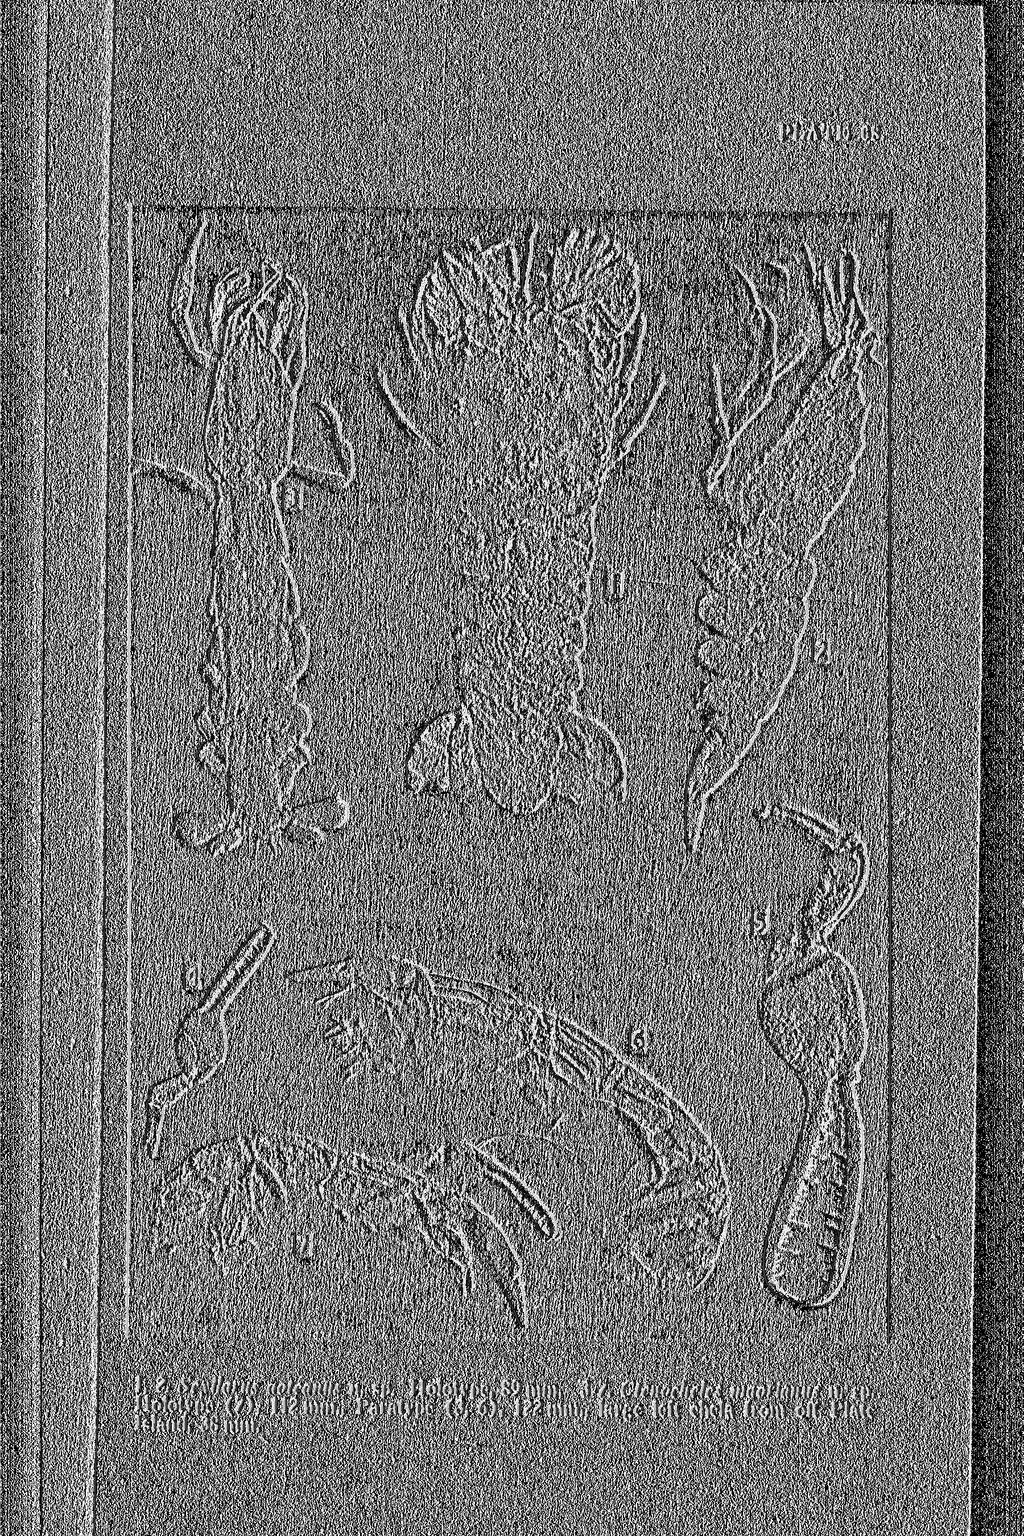 P L A T E 68. 1, 2. Scy Hants aotcamts n. sp. Holotype, 89 mm. 3-7. Ctcuochclcs maorianus n.?p. Holotype ( 7 ).